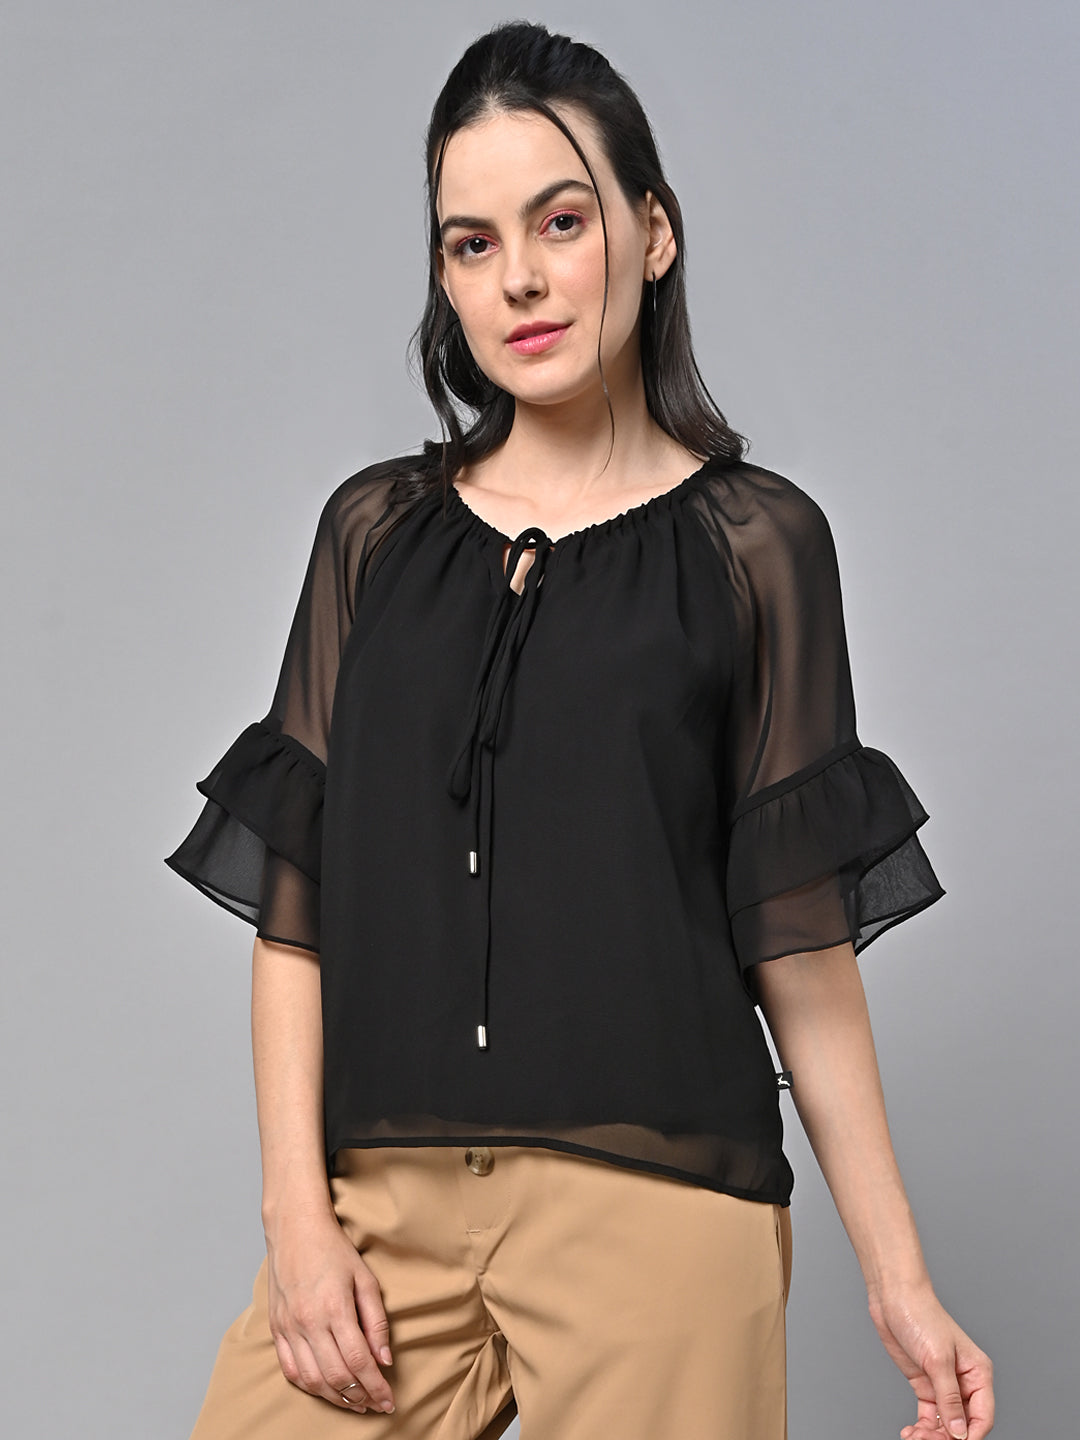 Valbone Women’s Black Color Solid Top With Half-Sleeves